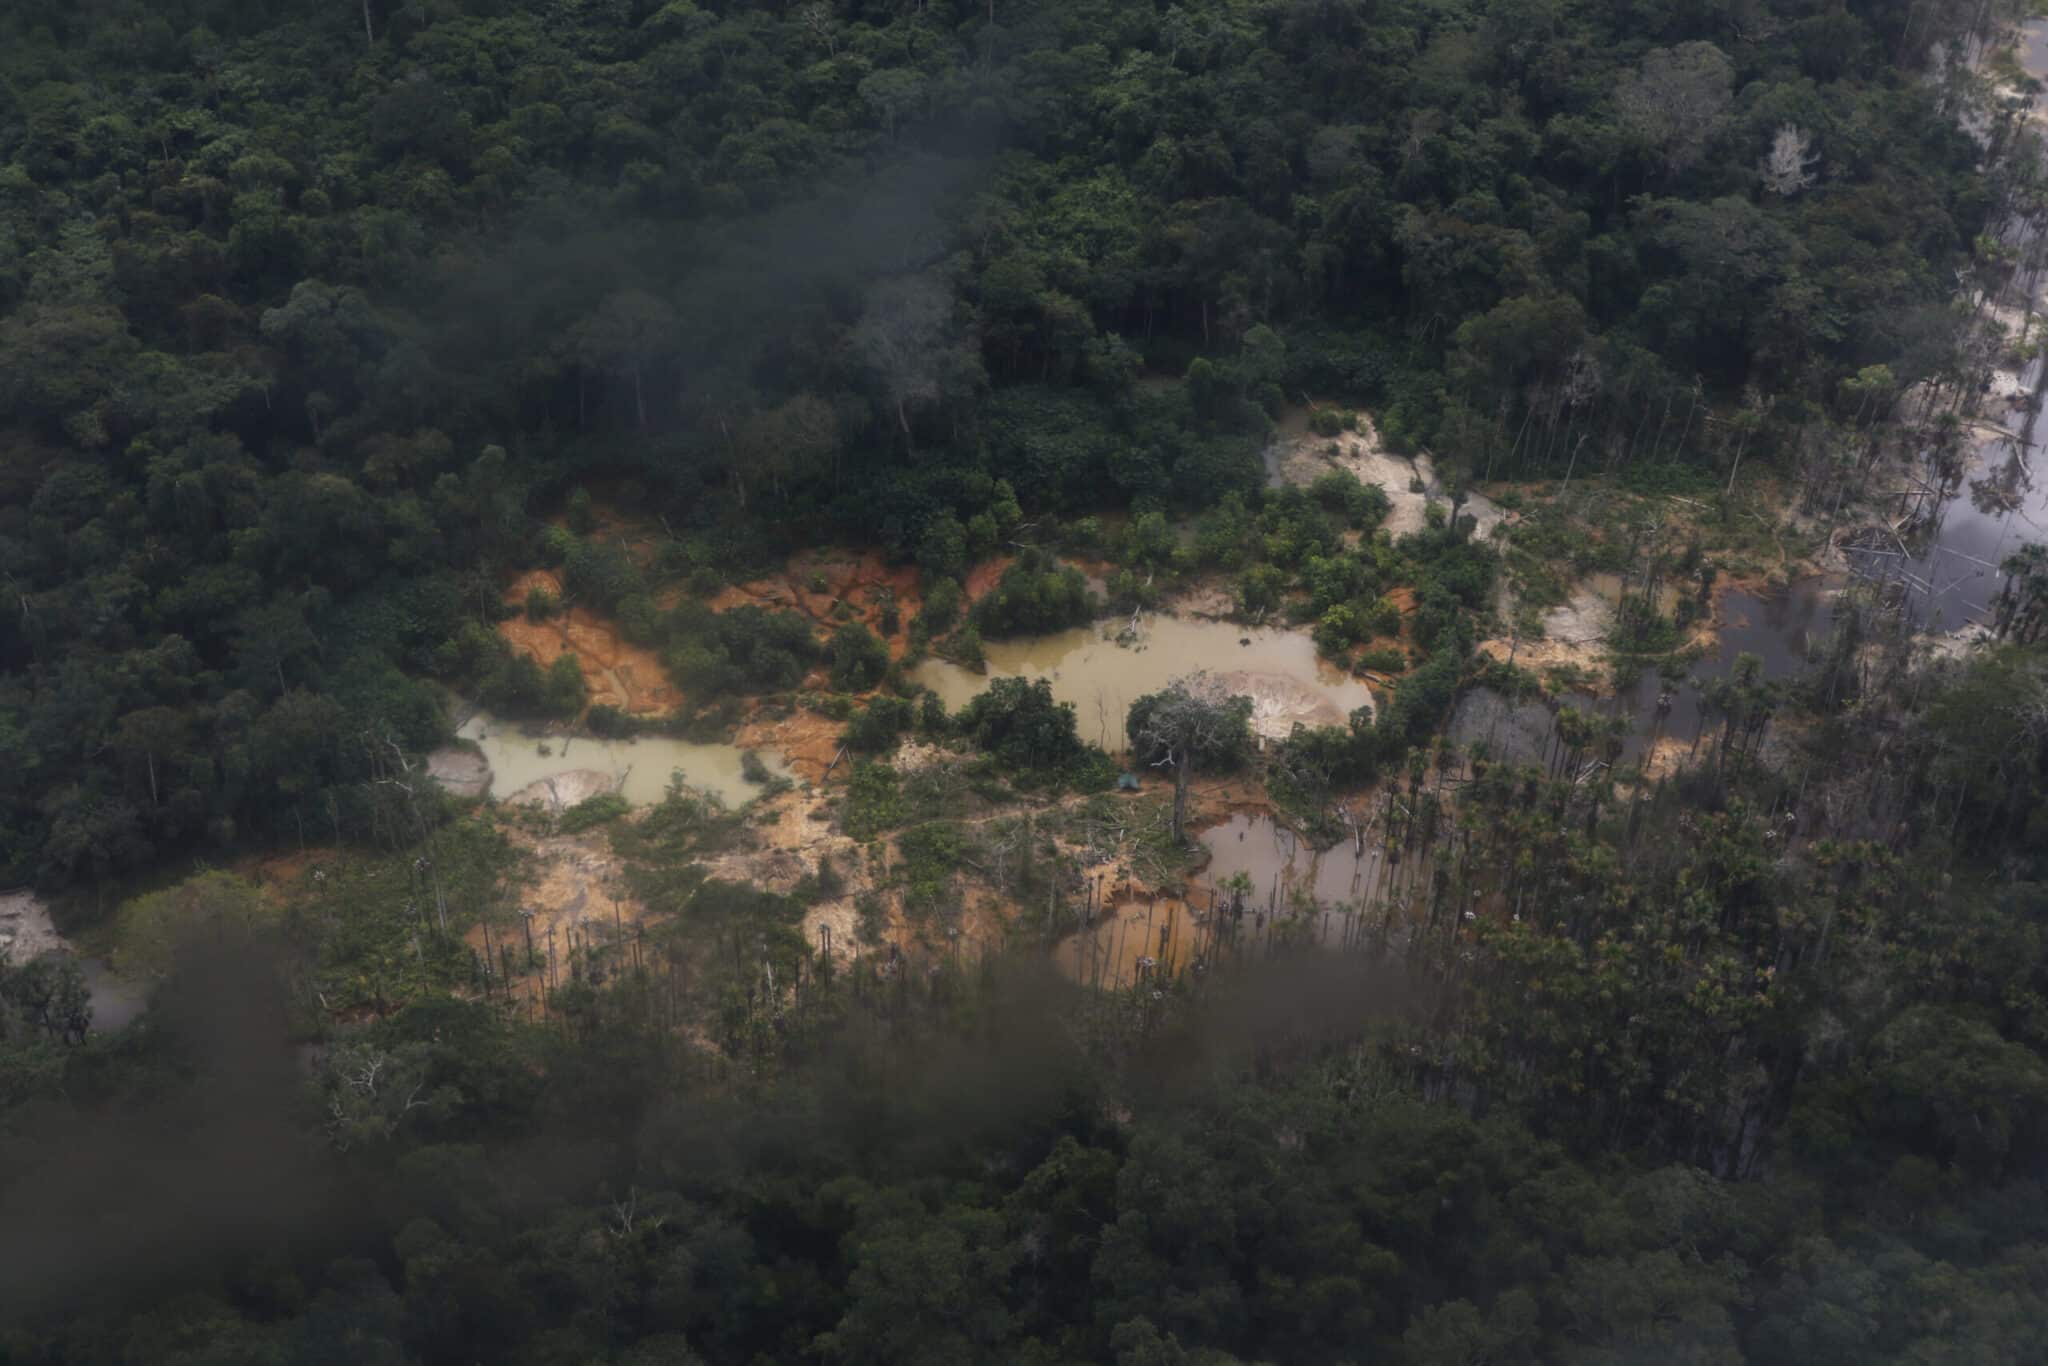 operacao contra garimpo ilegal prende dois militares no amazonas scaled